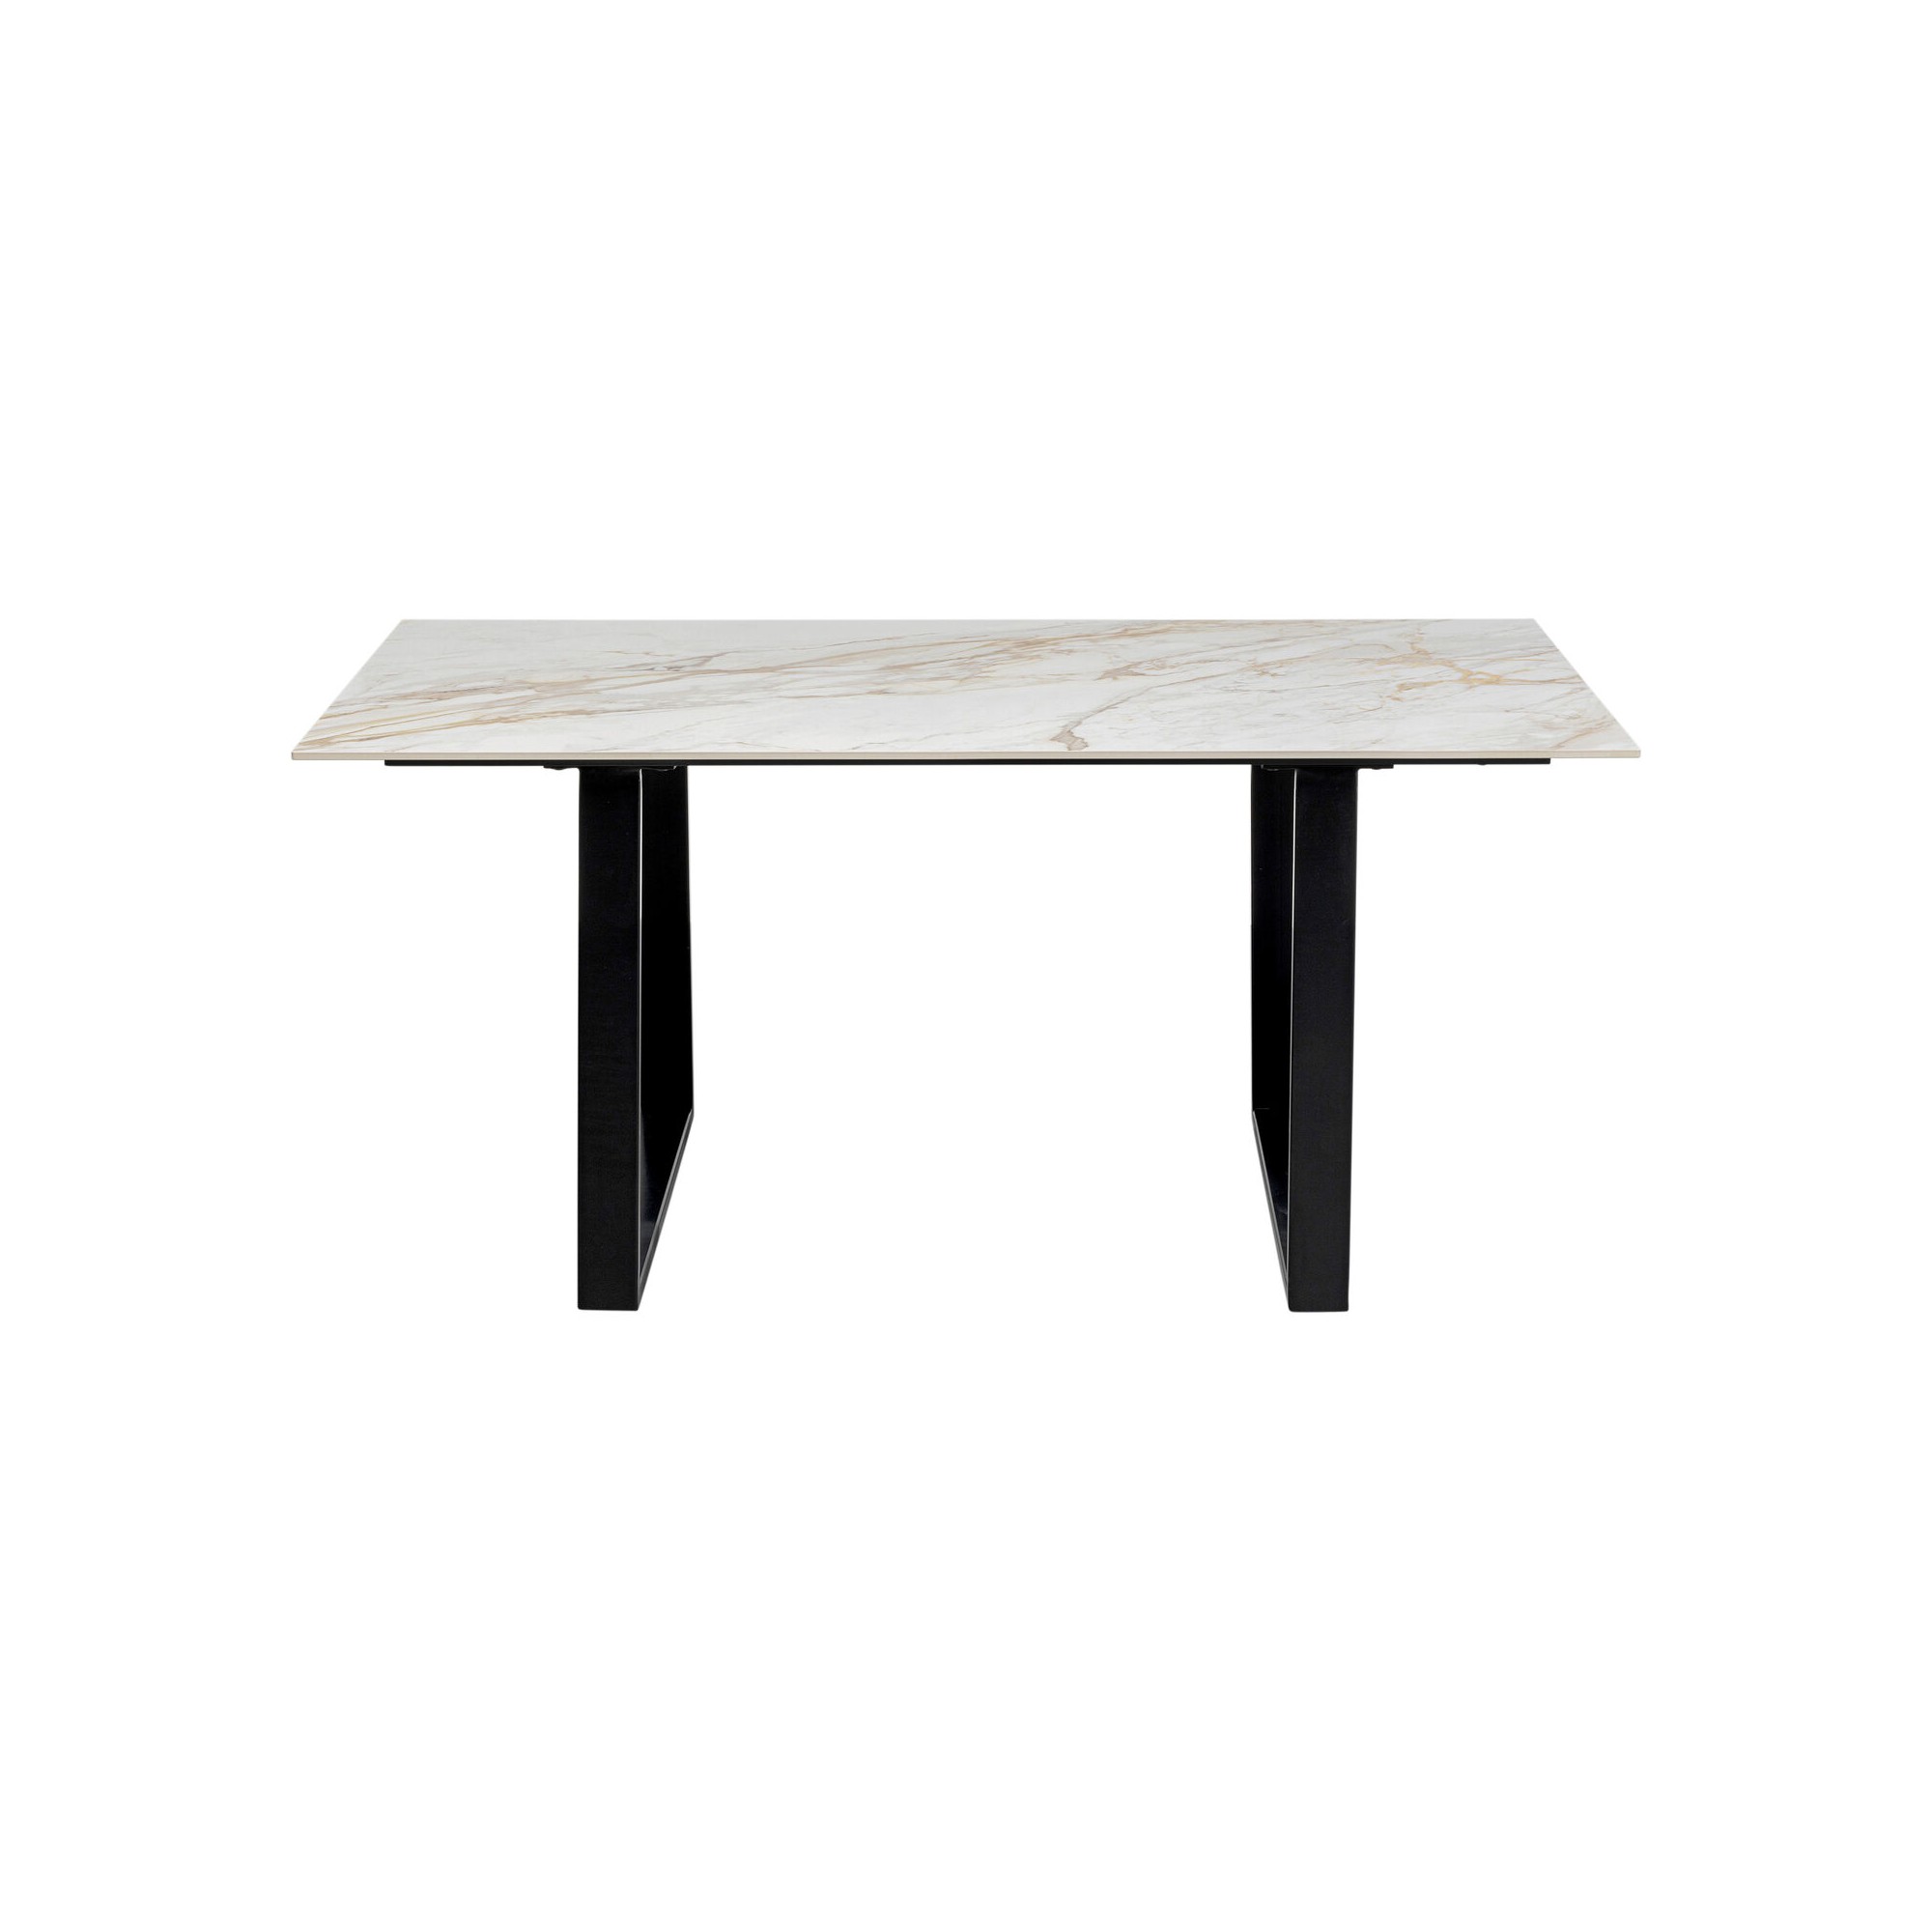 Table Eternity white and black 160x80cm Kare Design